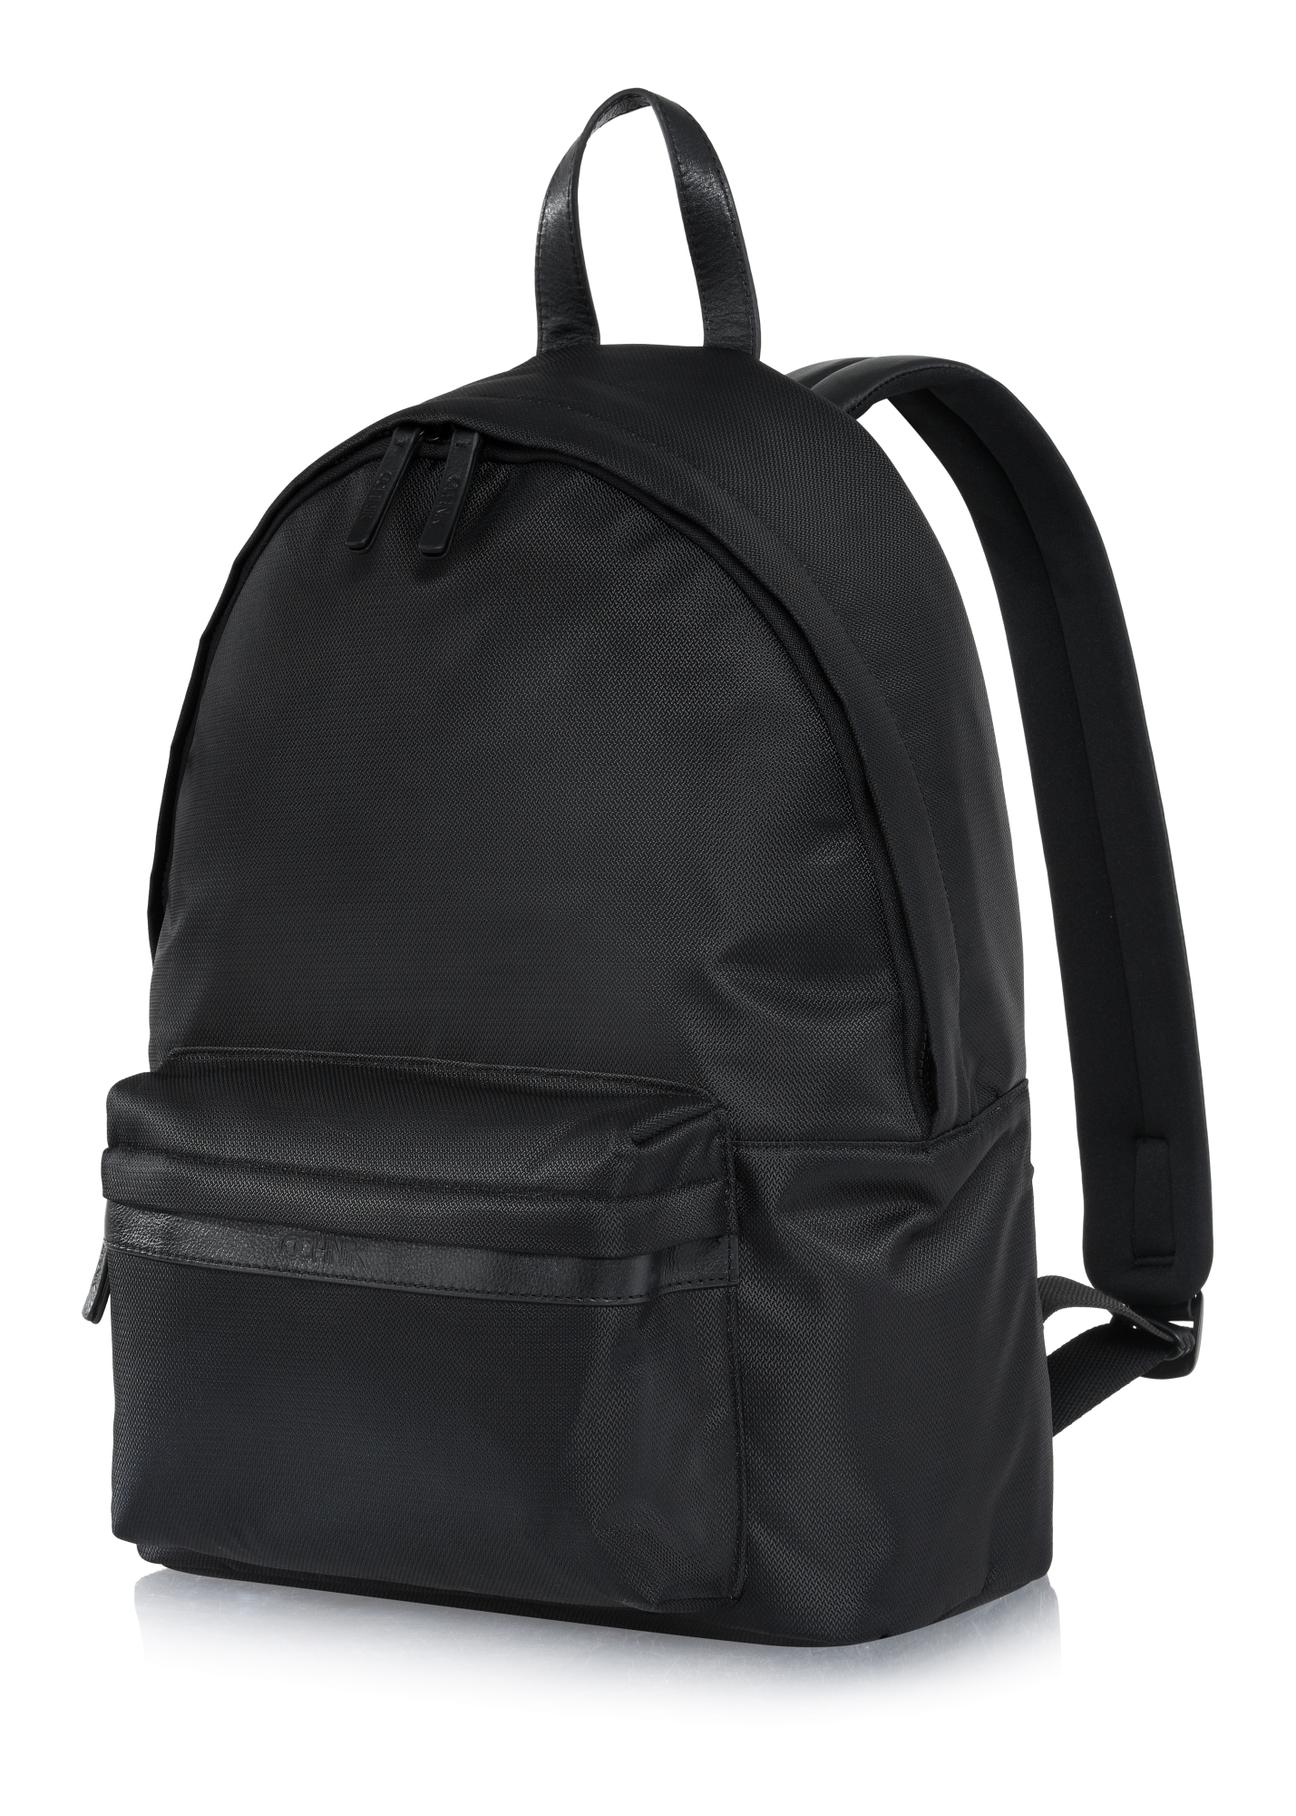 Czarny klasyczny plecak męski PLCMN-0013-99(Z23)